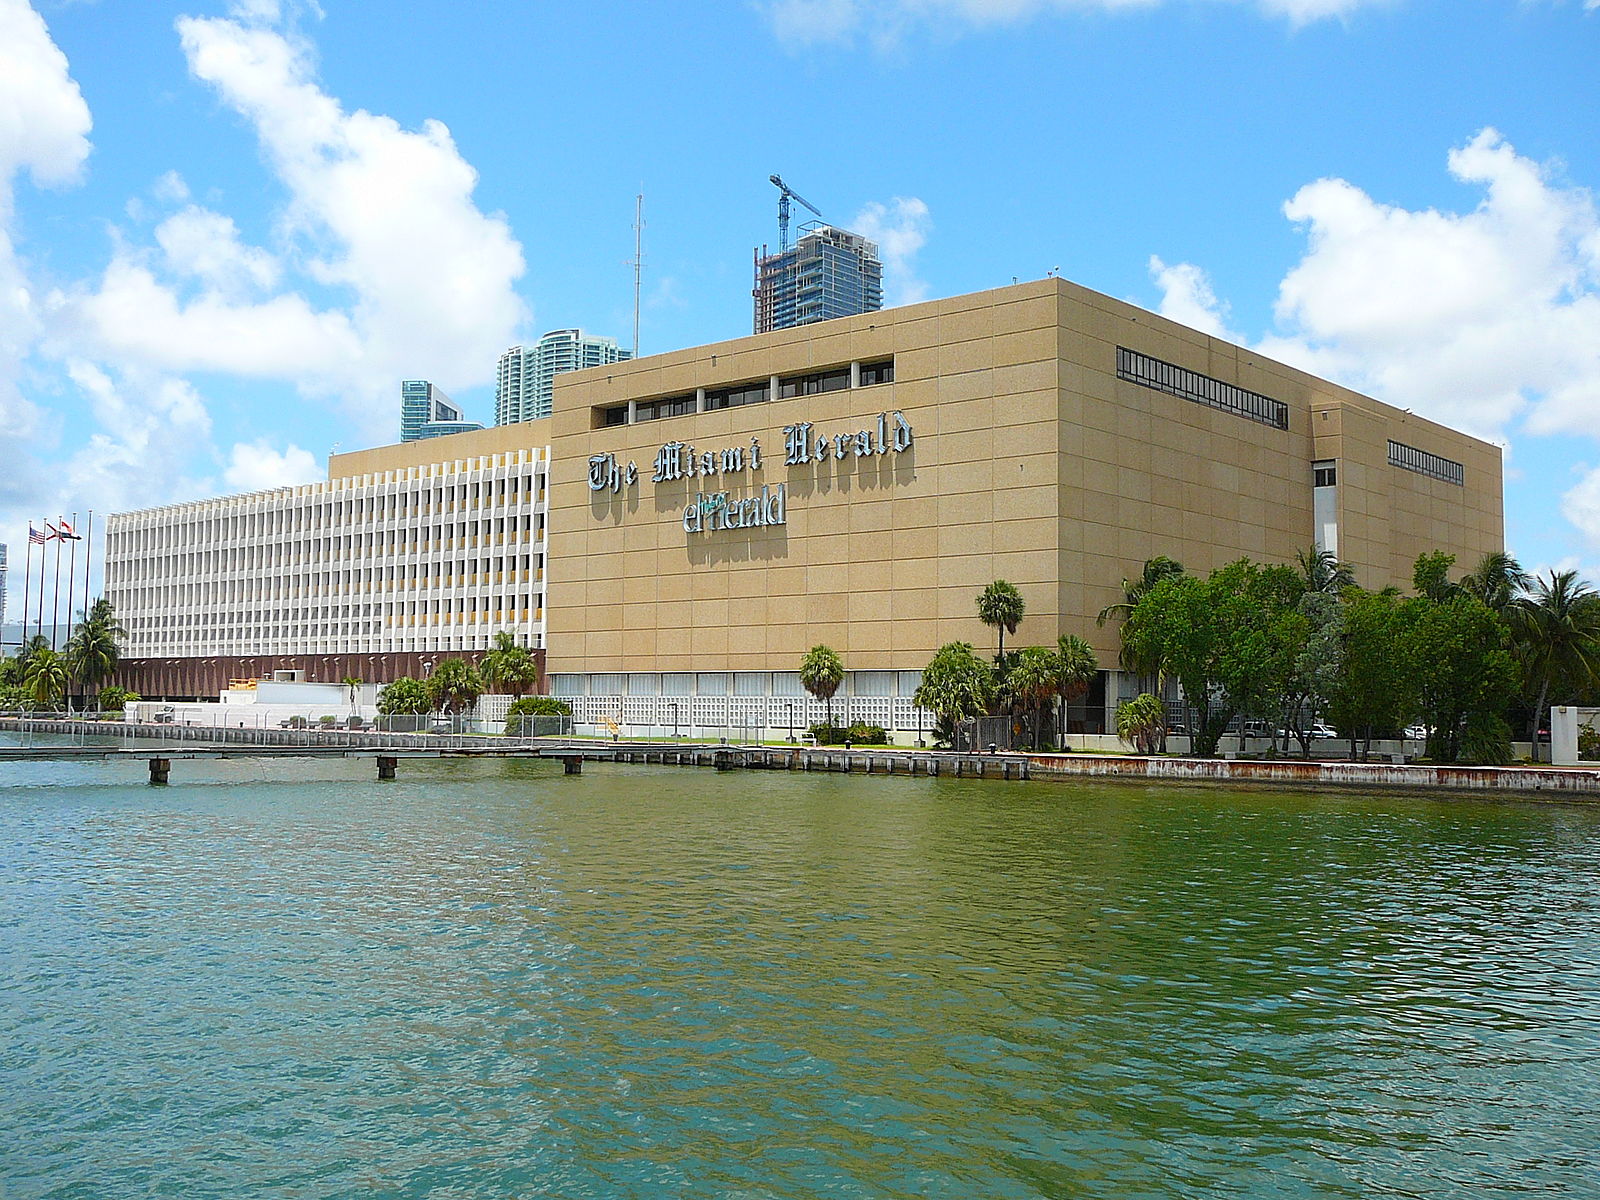 Former Miami Herald Building. Courtesy of Marc Averette on Wikipedia.